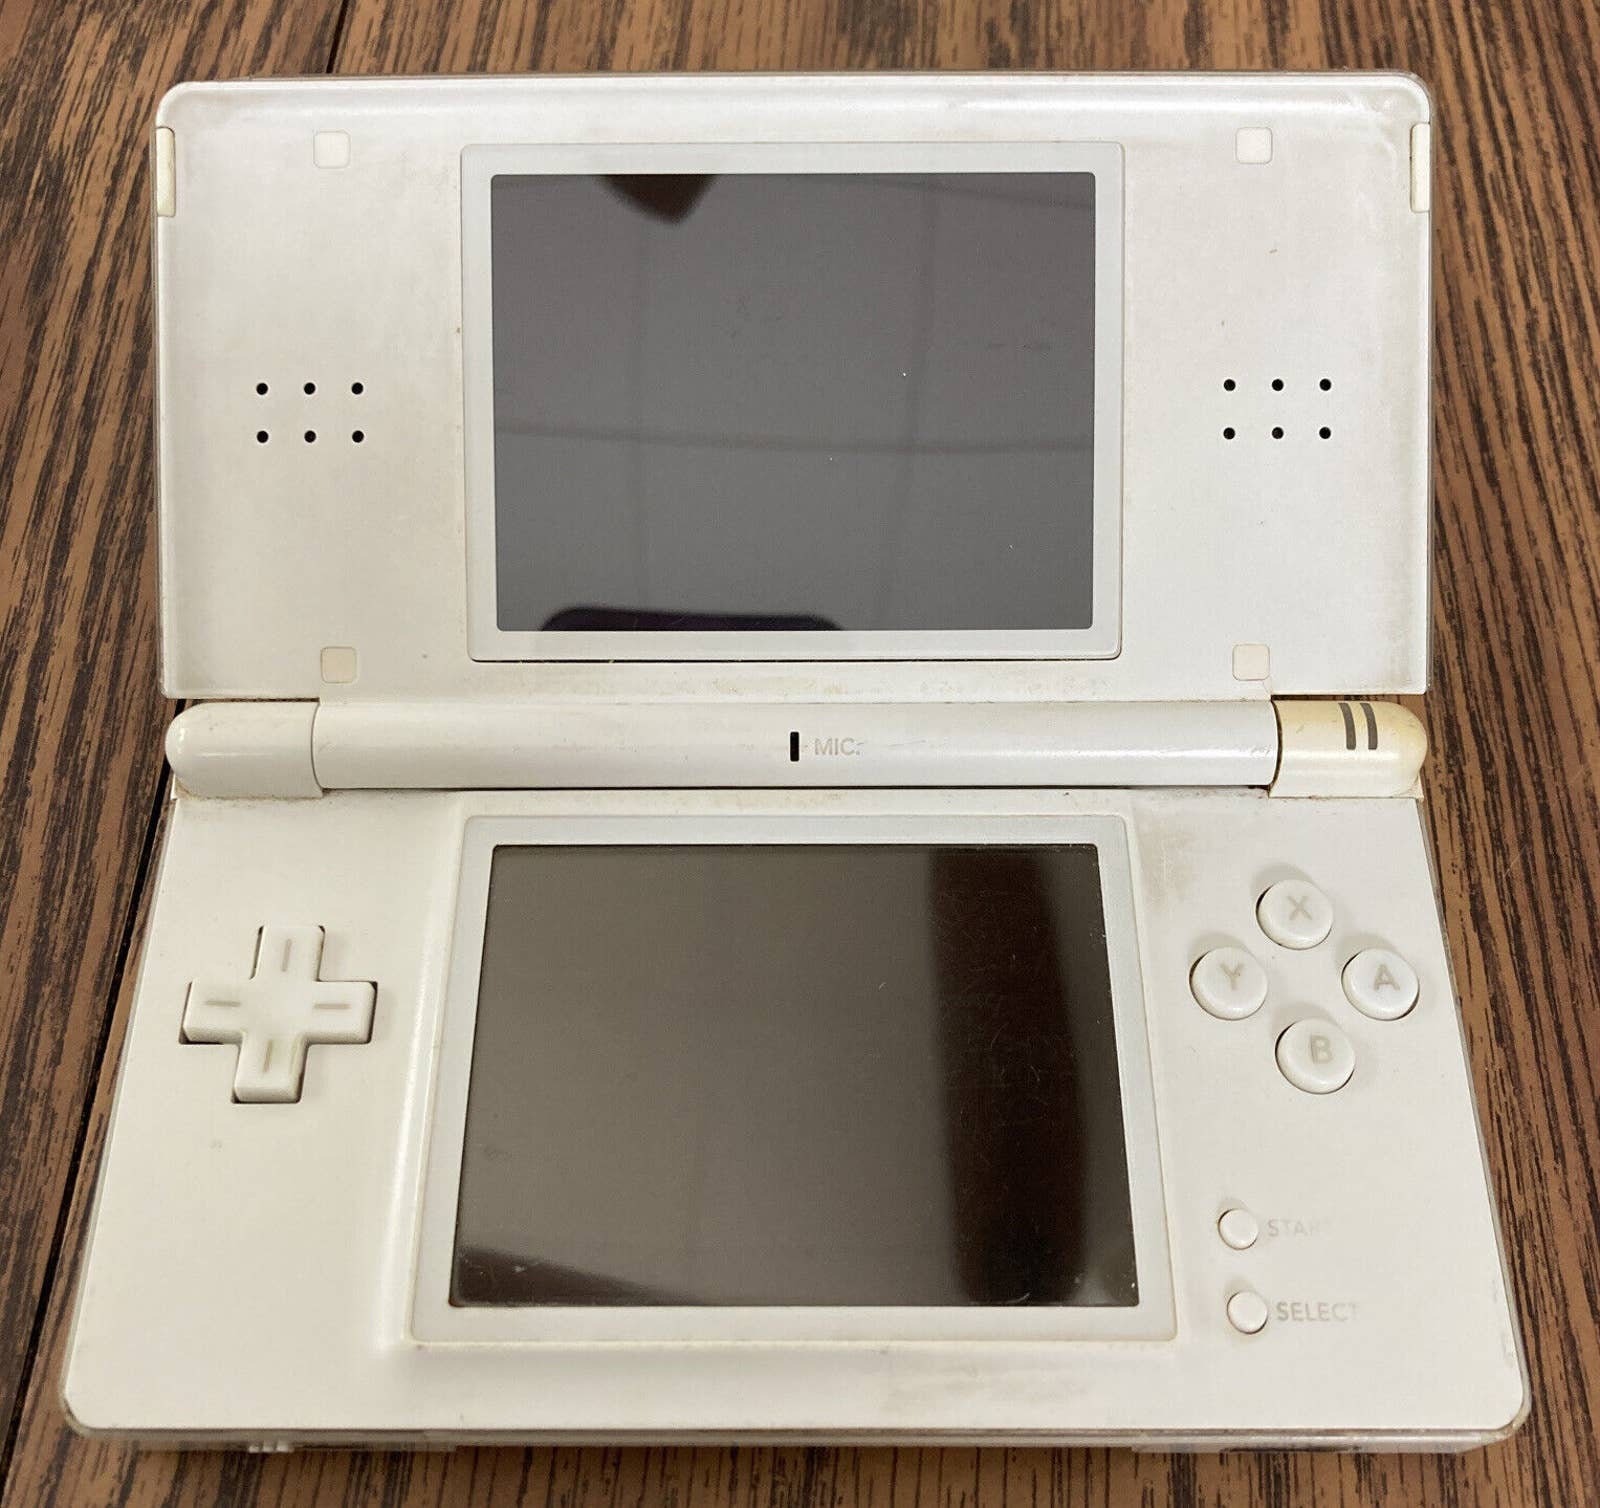 Nintendo DSi Orange handheld system Console